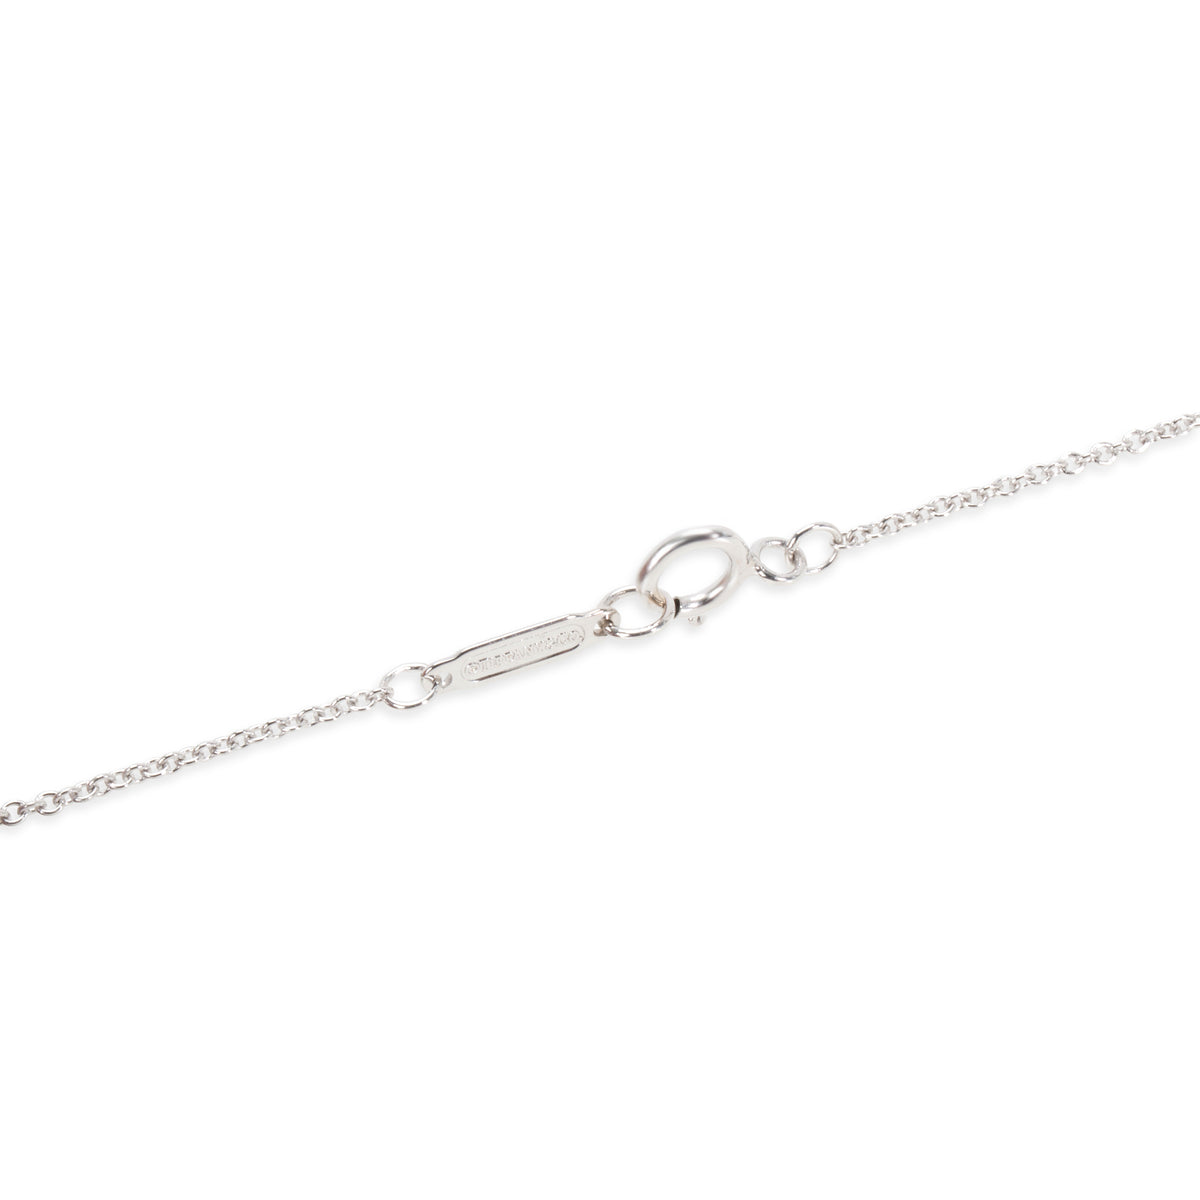 Tiffany & Co. Medium Key Diamond Necklace in 18K White Gold 0.12 CTW